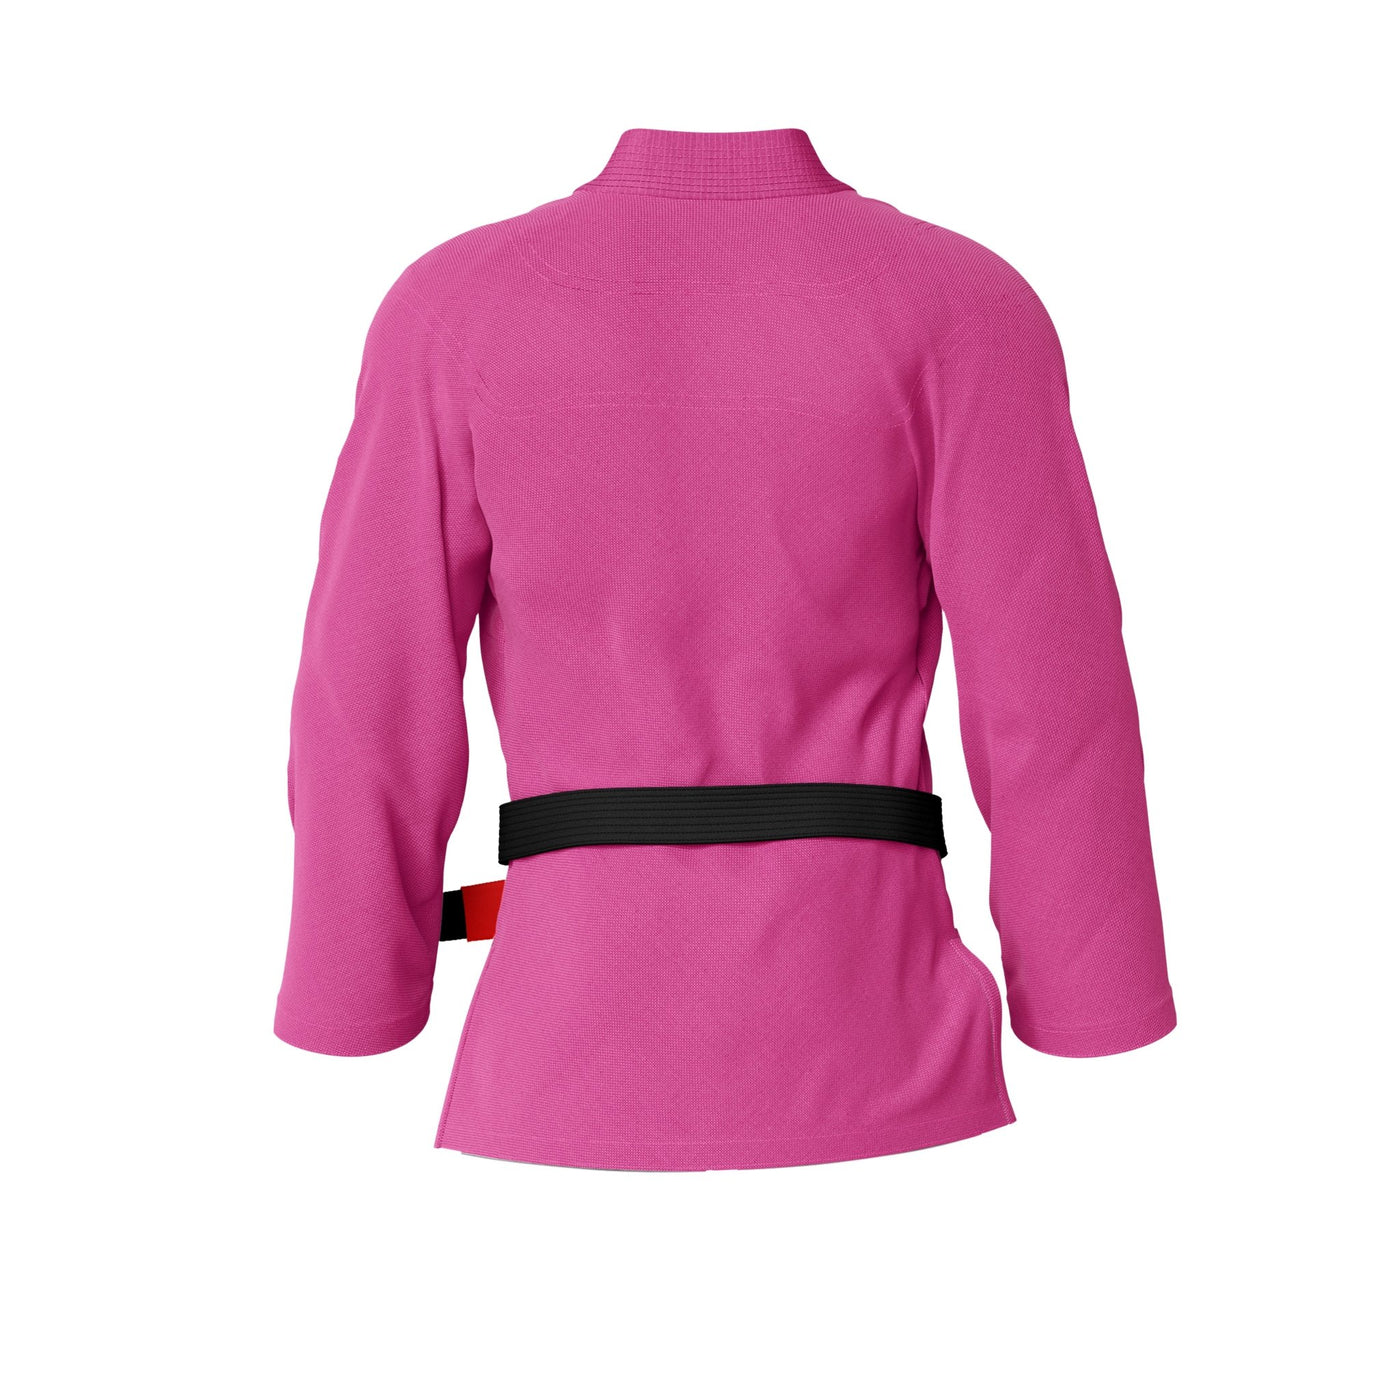 Plain Pink Brazilian Jiu Jitsu Gi Jacket - Summo Sports